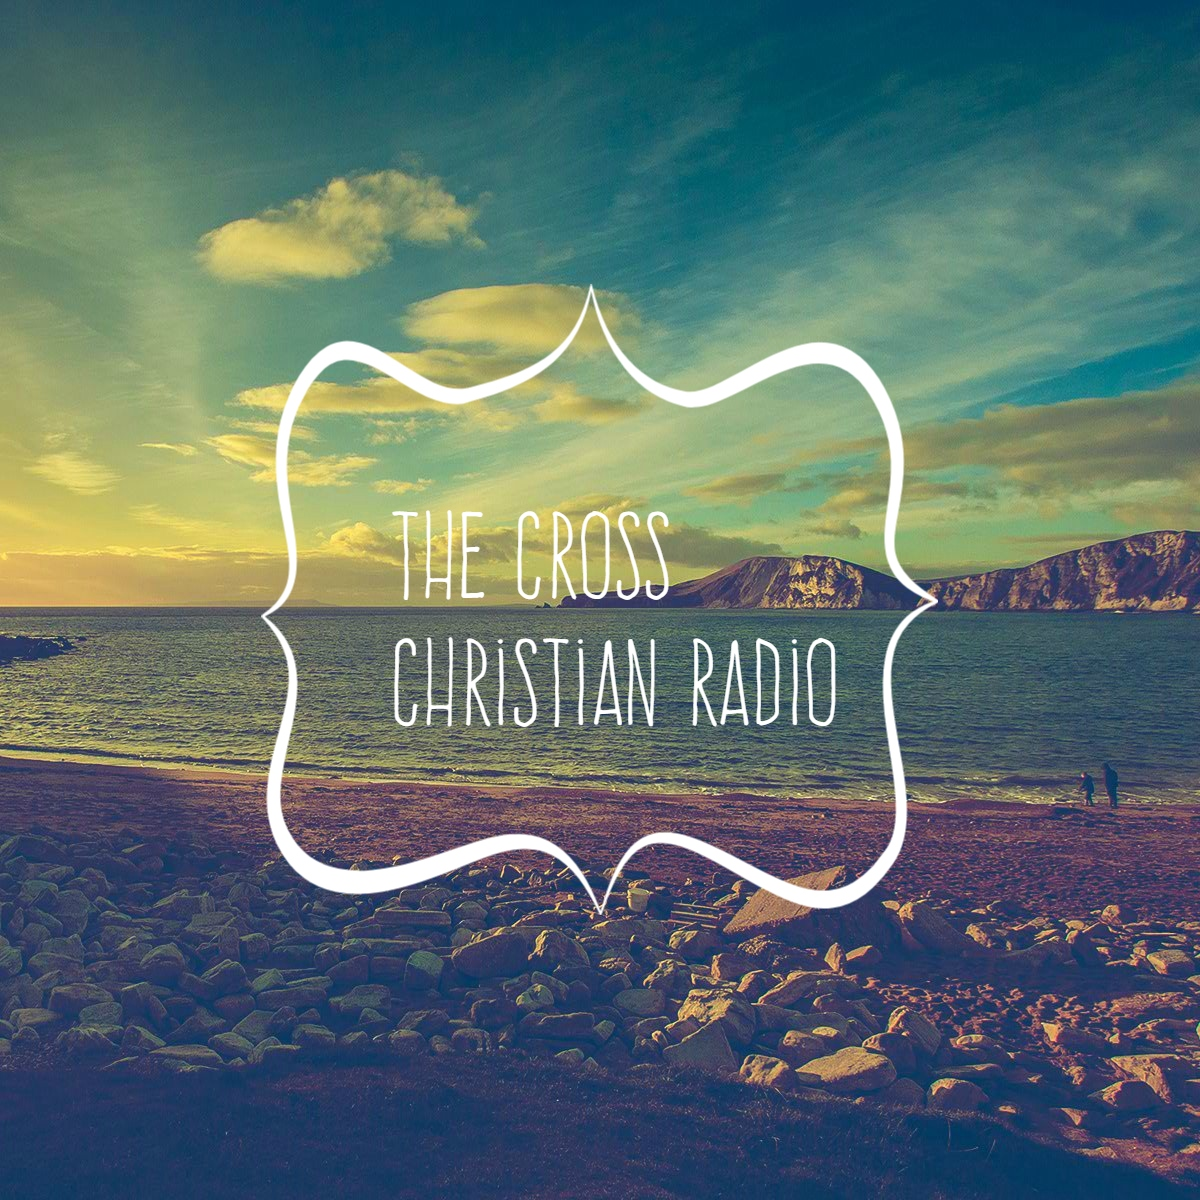 The Cross Christian Radio